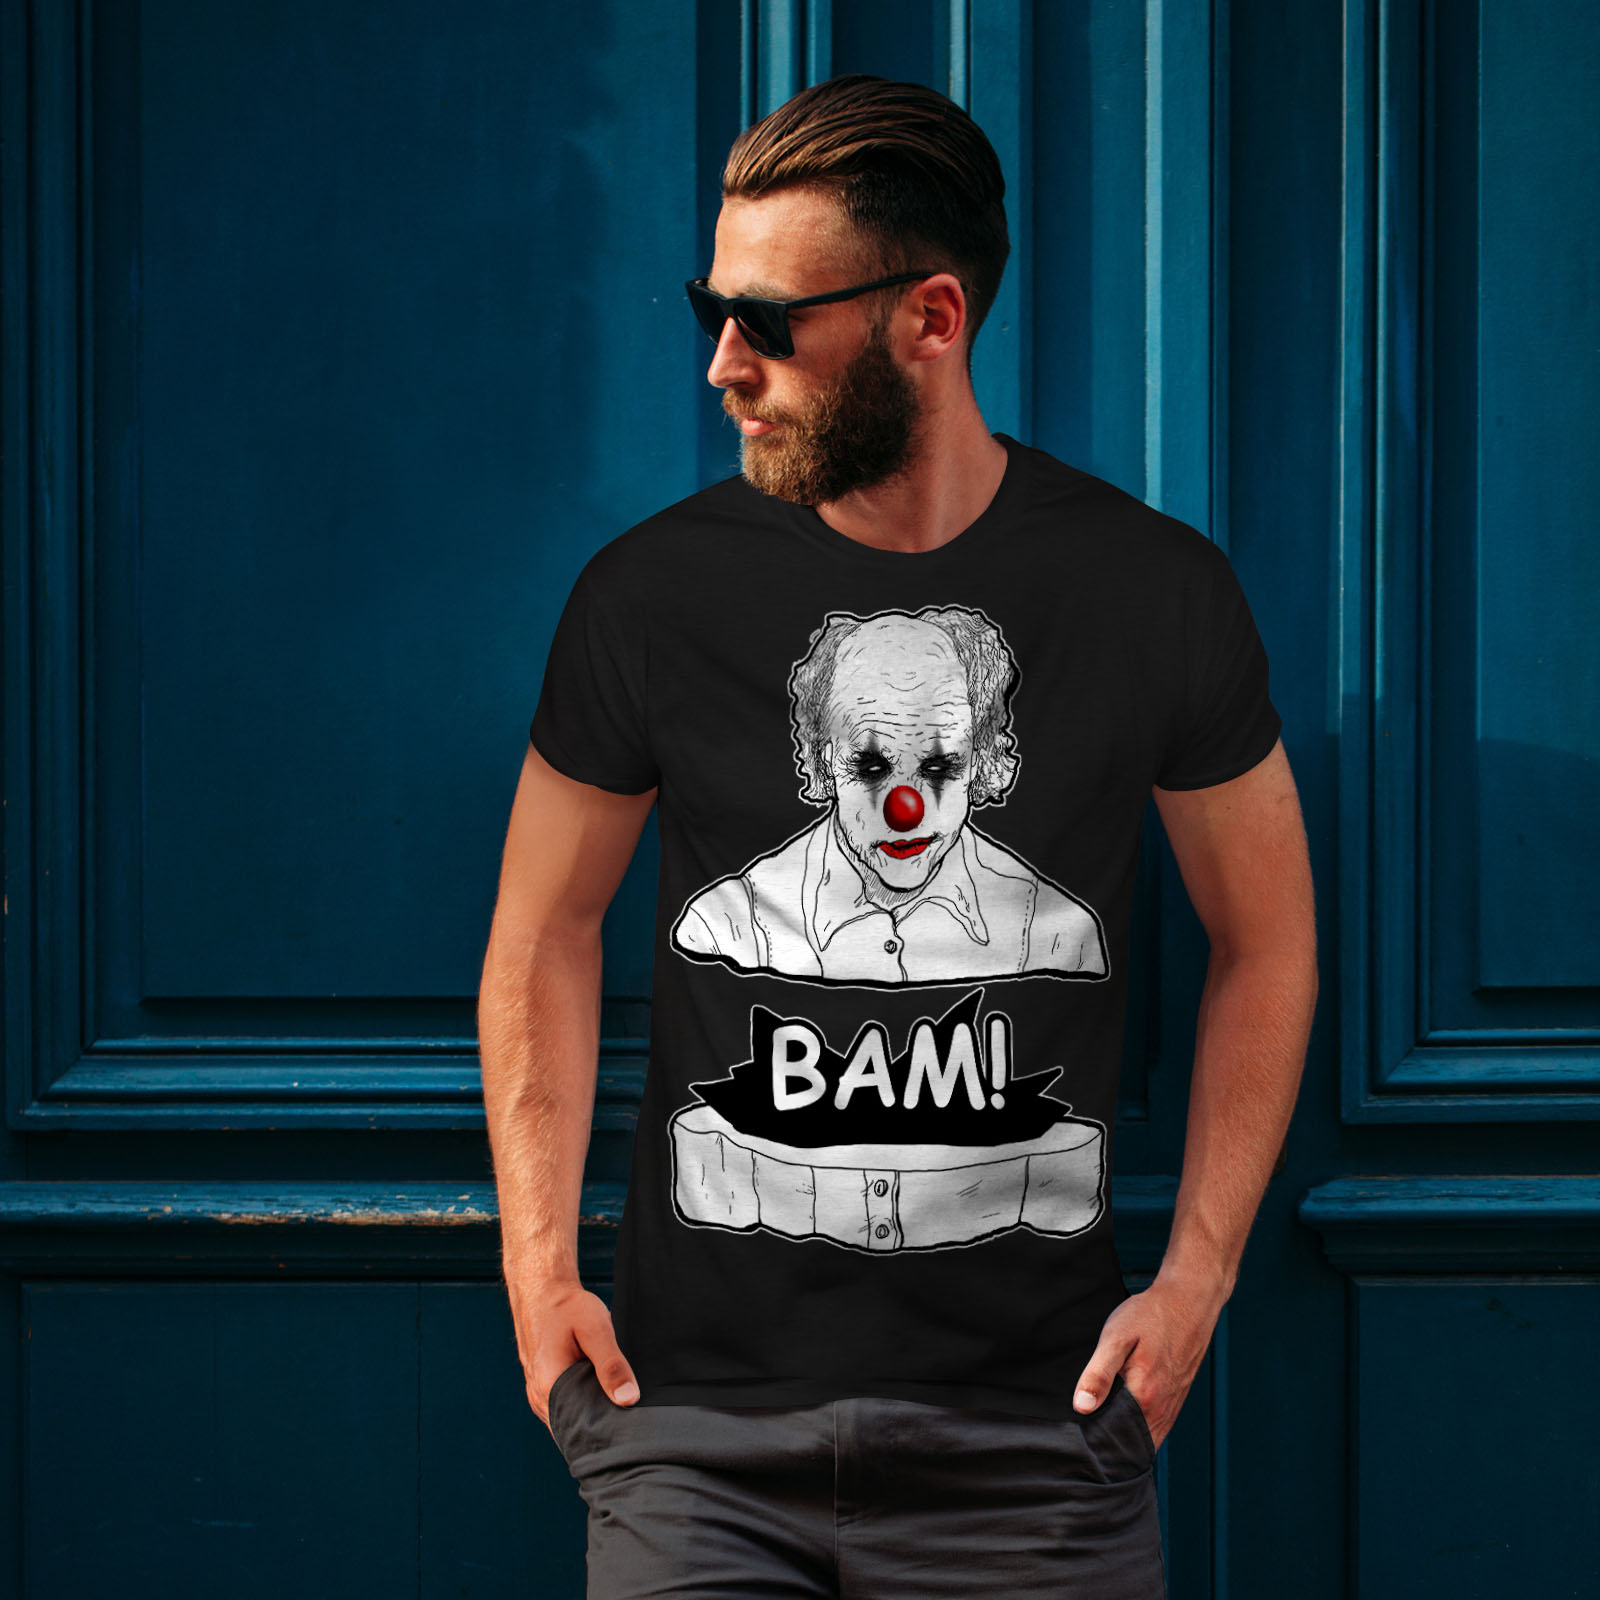 Wellcoda Clown Scary Creep Mens T-shirt Scary Graphic Design Printed Tee